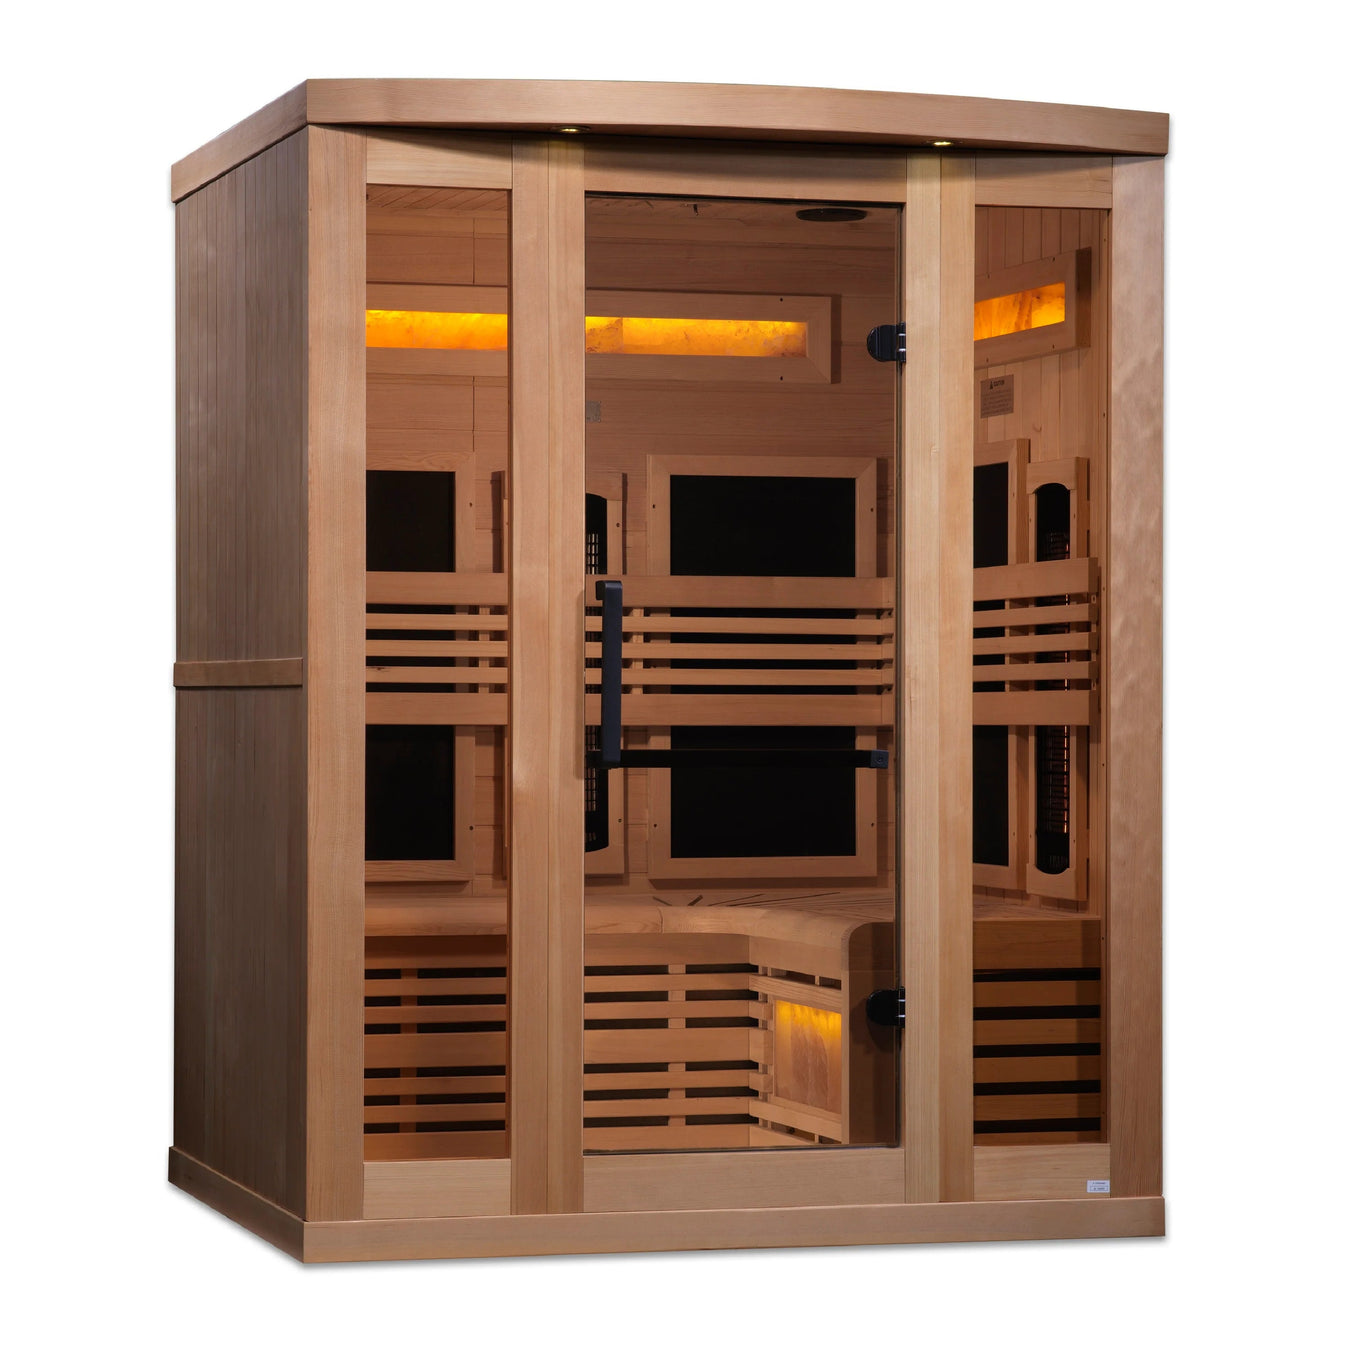 Image of Golden Designs 3 Person Saunas